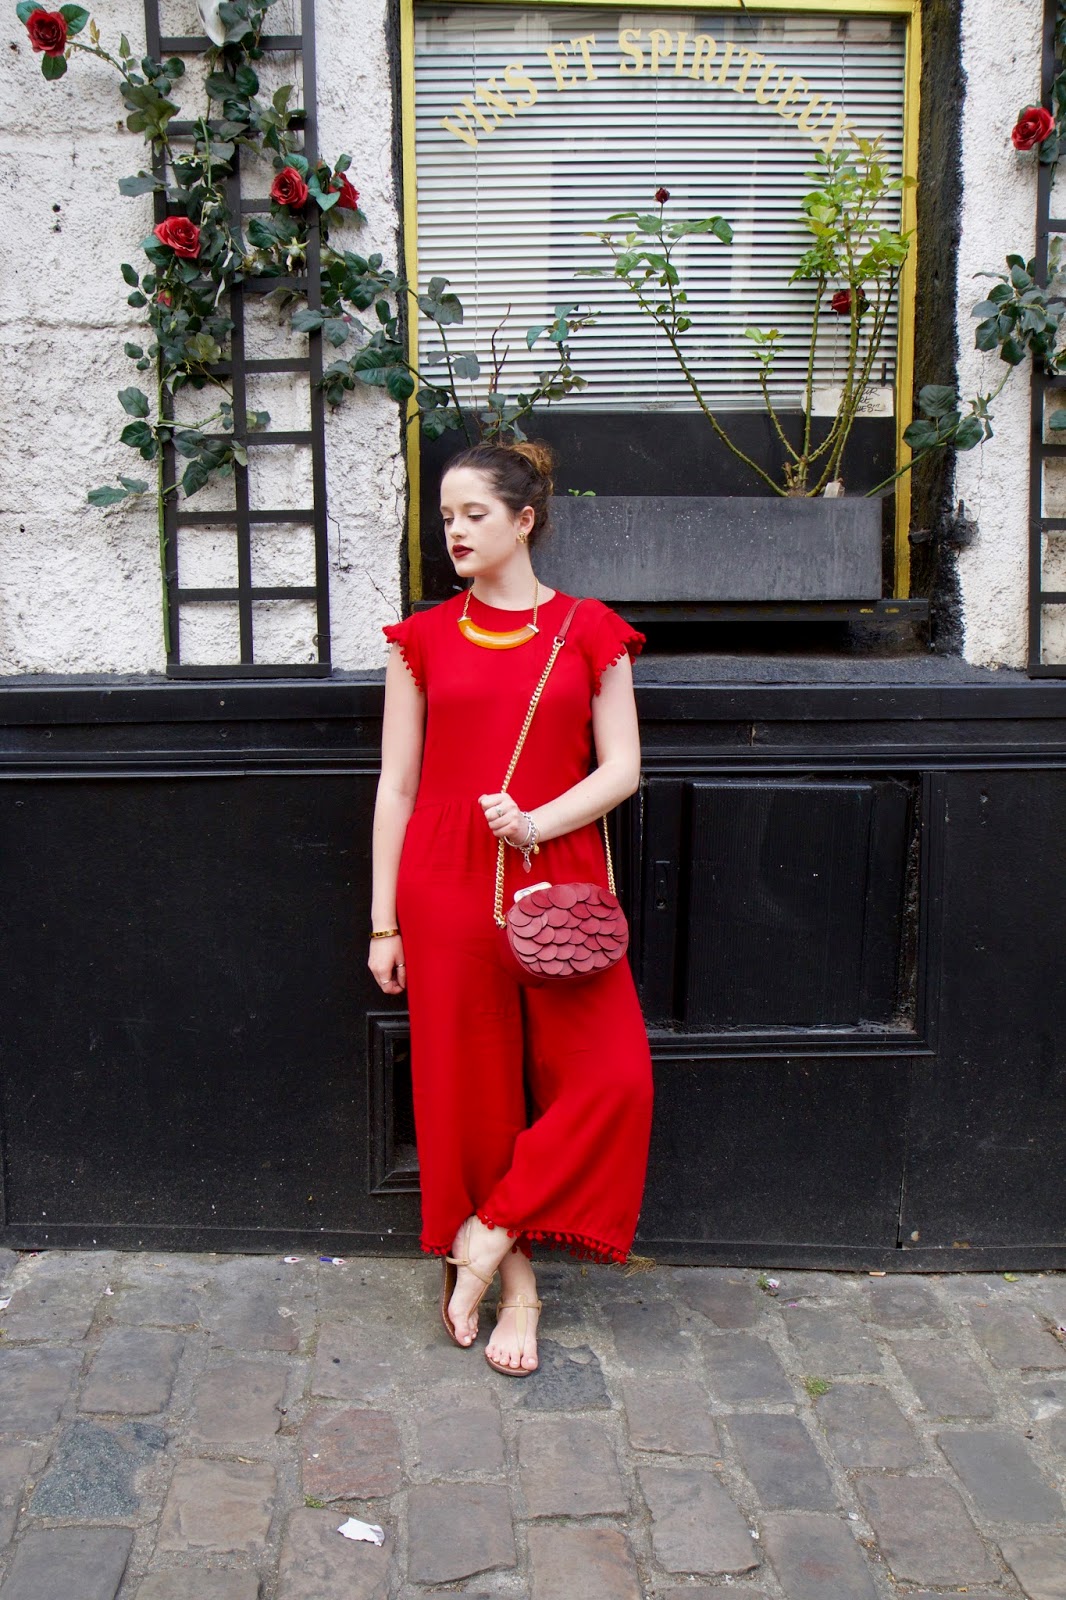 Fashion blogger Kathleen Harper on Montmartre in Paris France